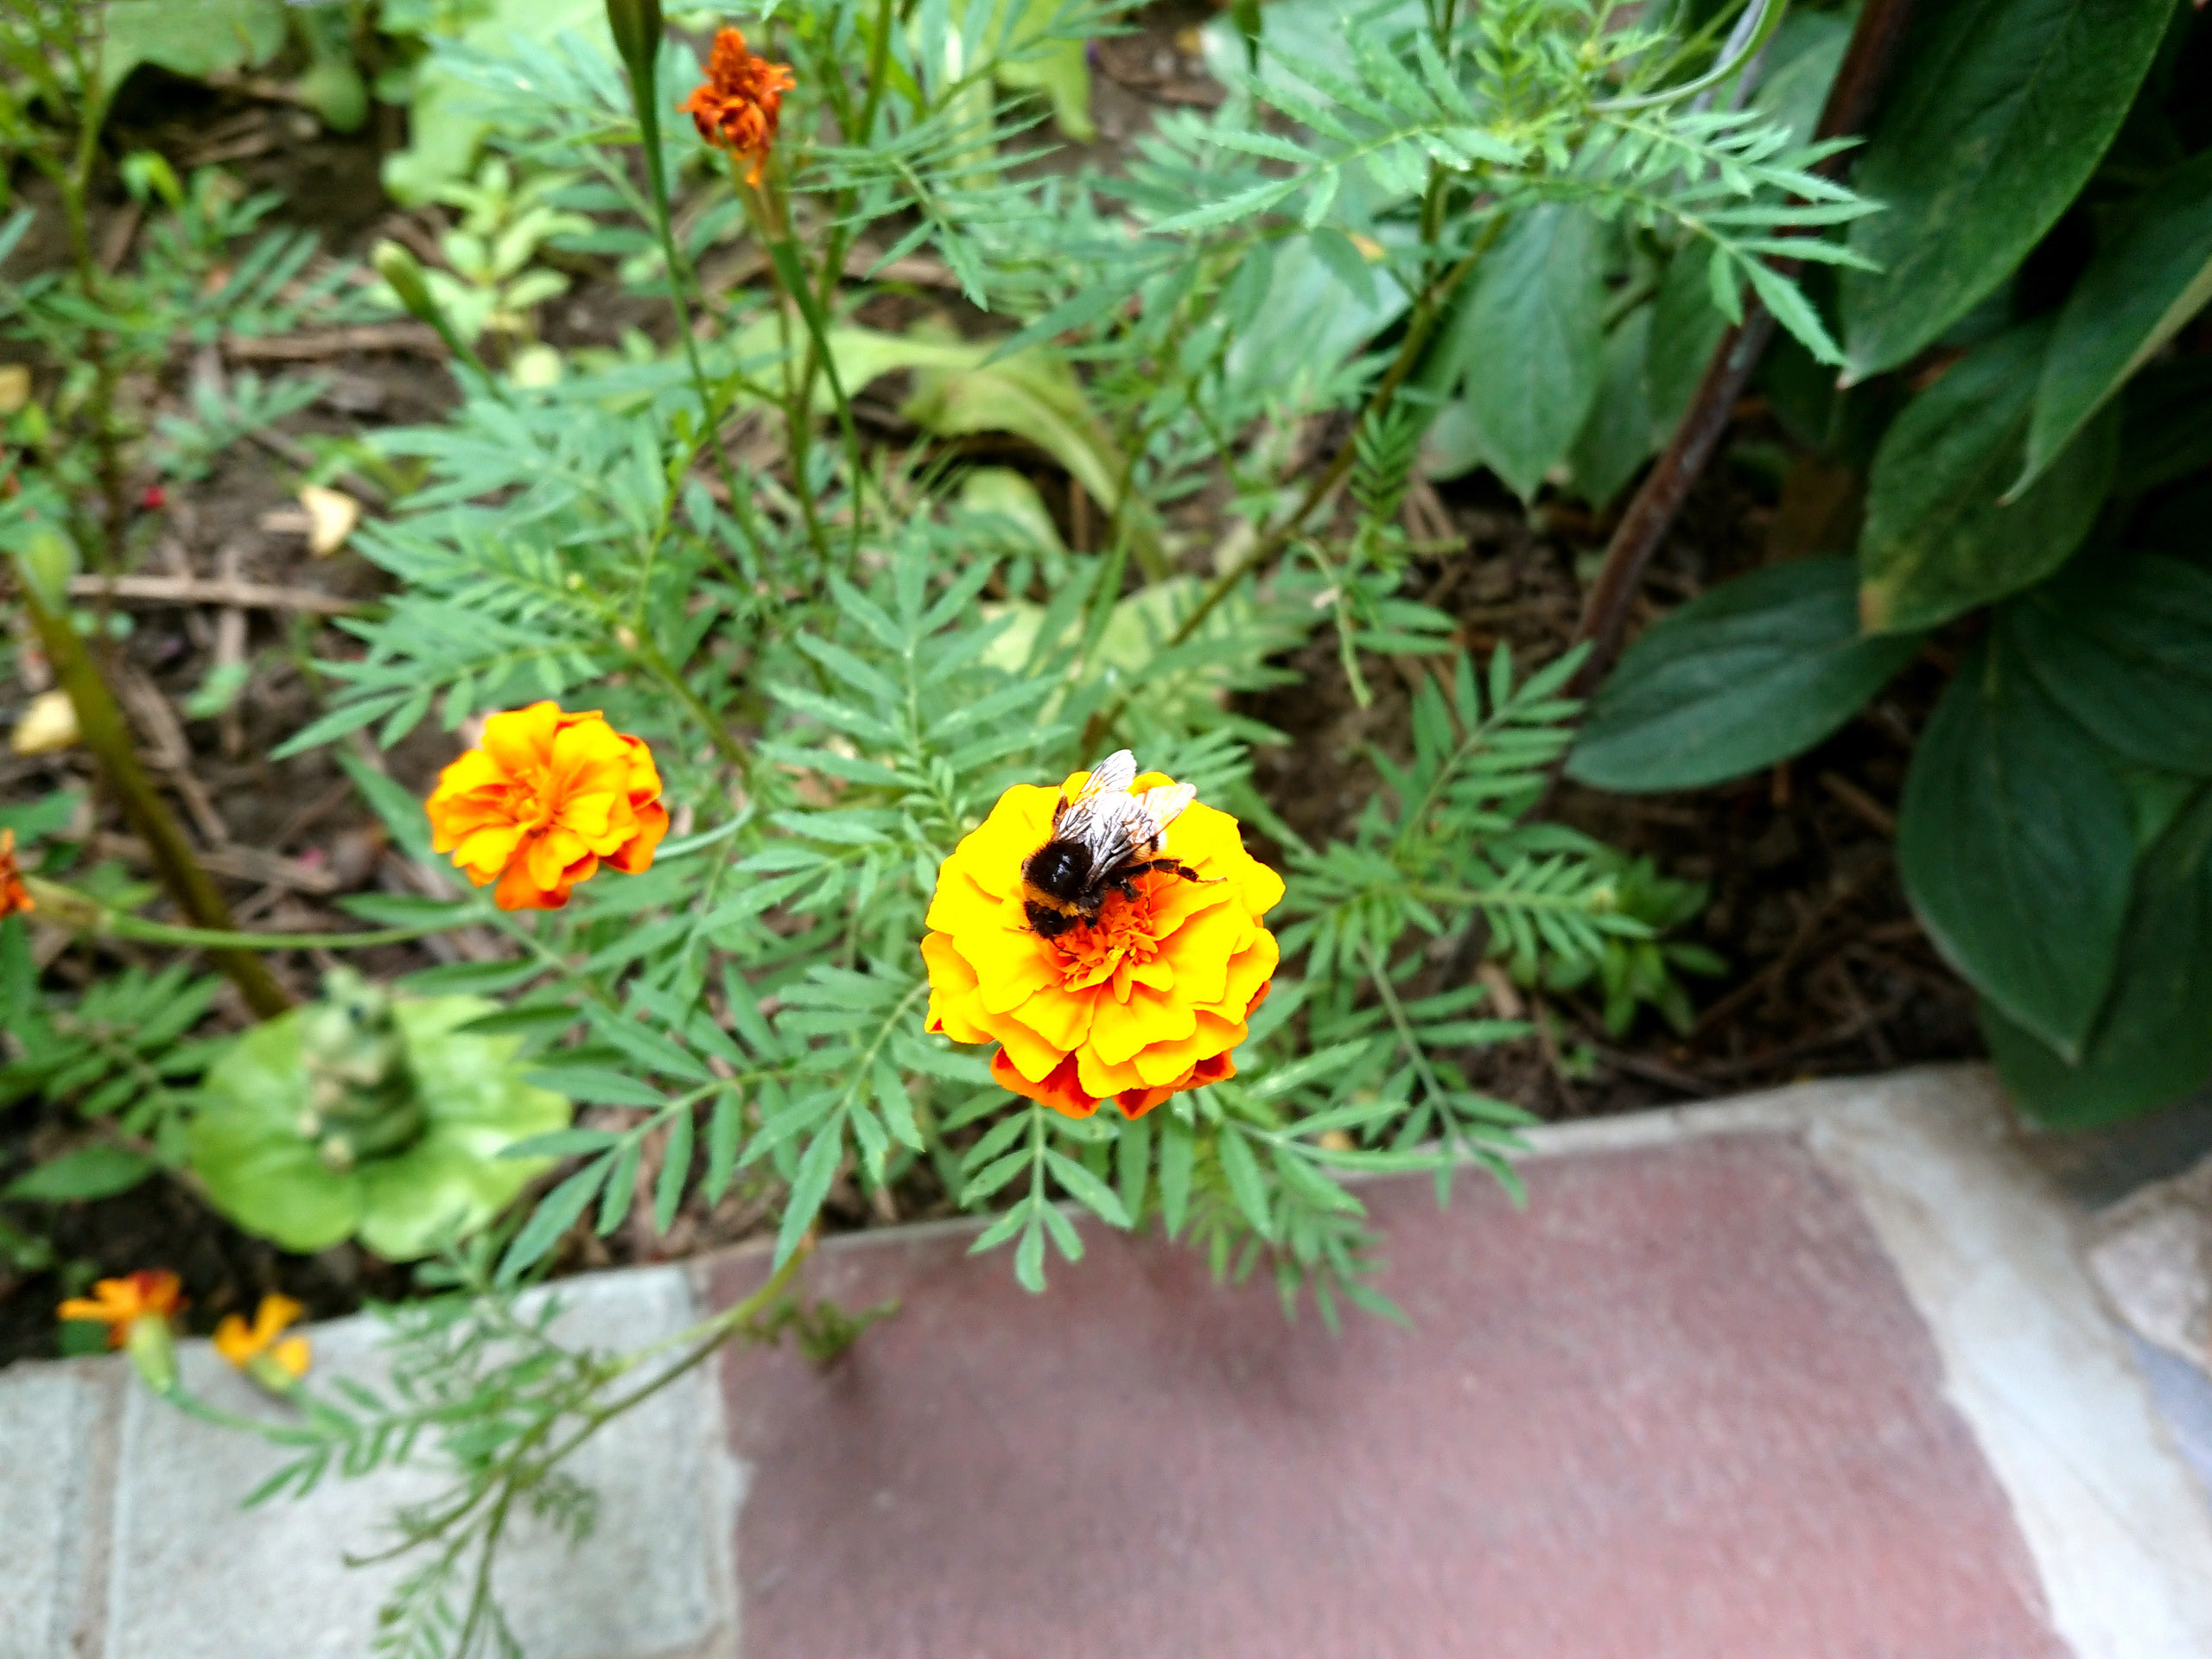 Under the bumblebee